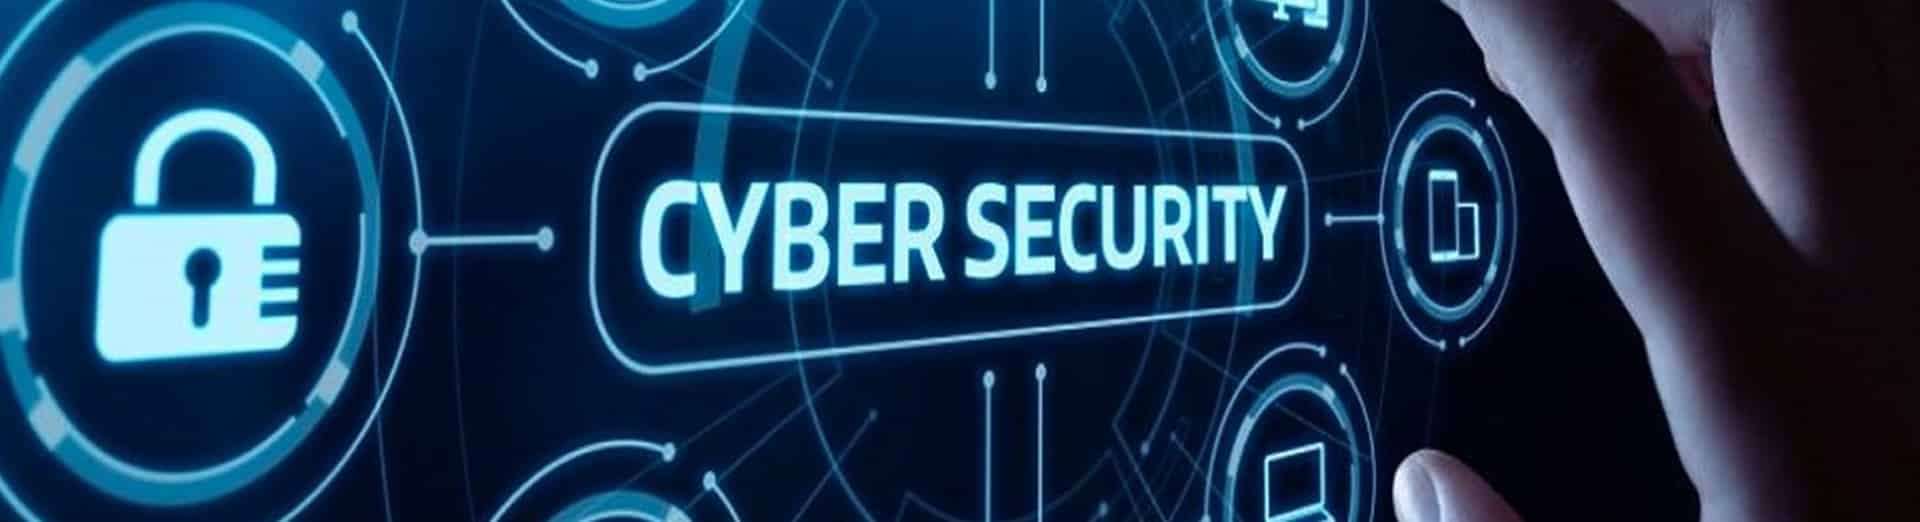 cyber security top secret